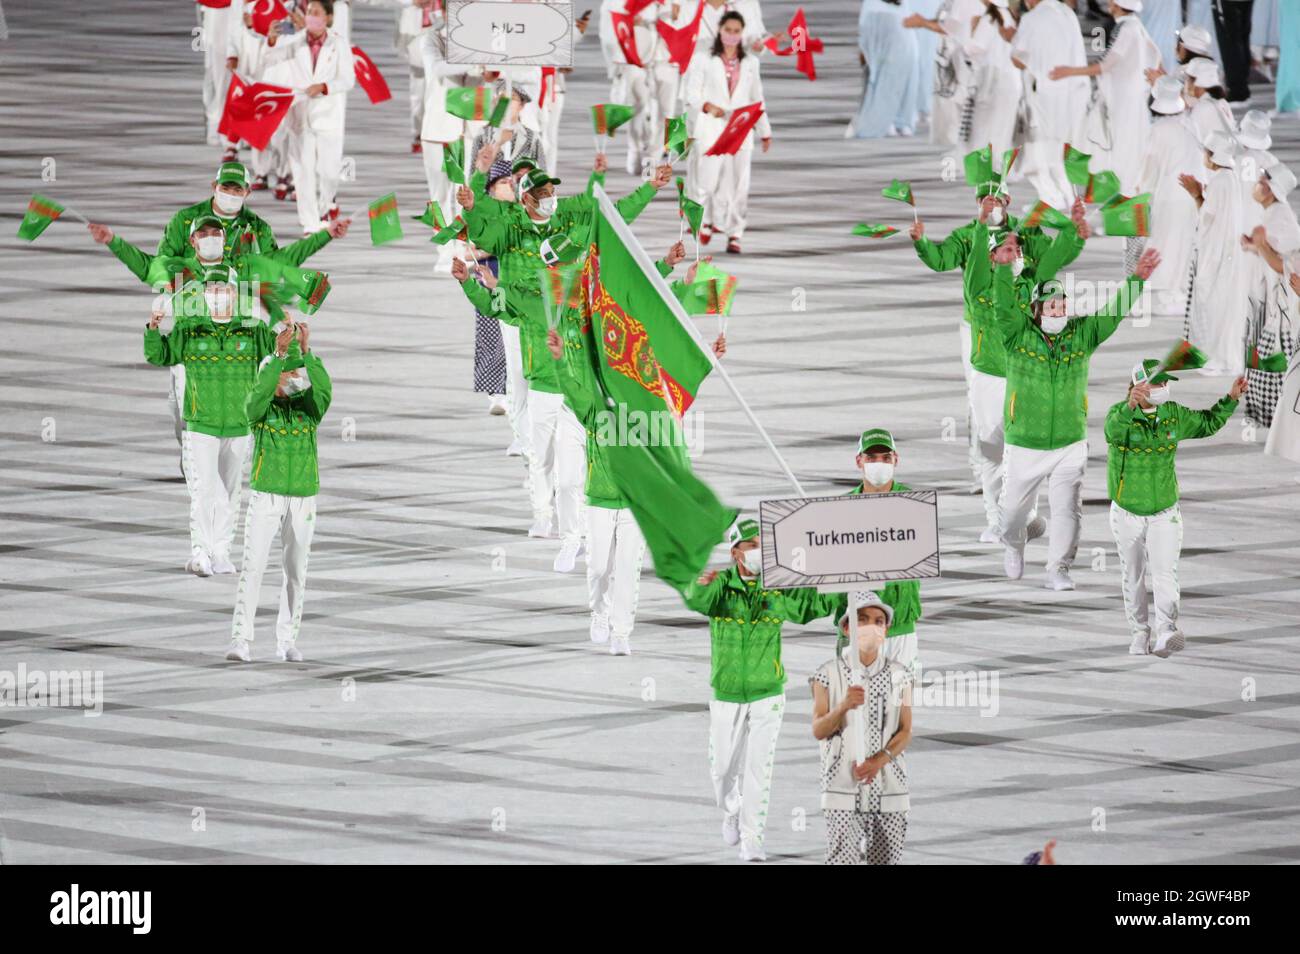 JULY 23rd, 2021 - TOKYO, JAPAN: Turkmenistan's flag bearers Gulbadam Babamuratova and Merdan Ataýew enter the Olympic Stadium with their delegation du Stock Photo